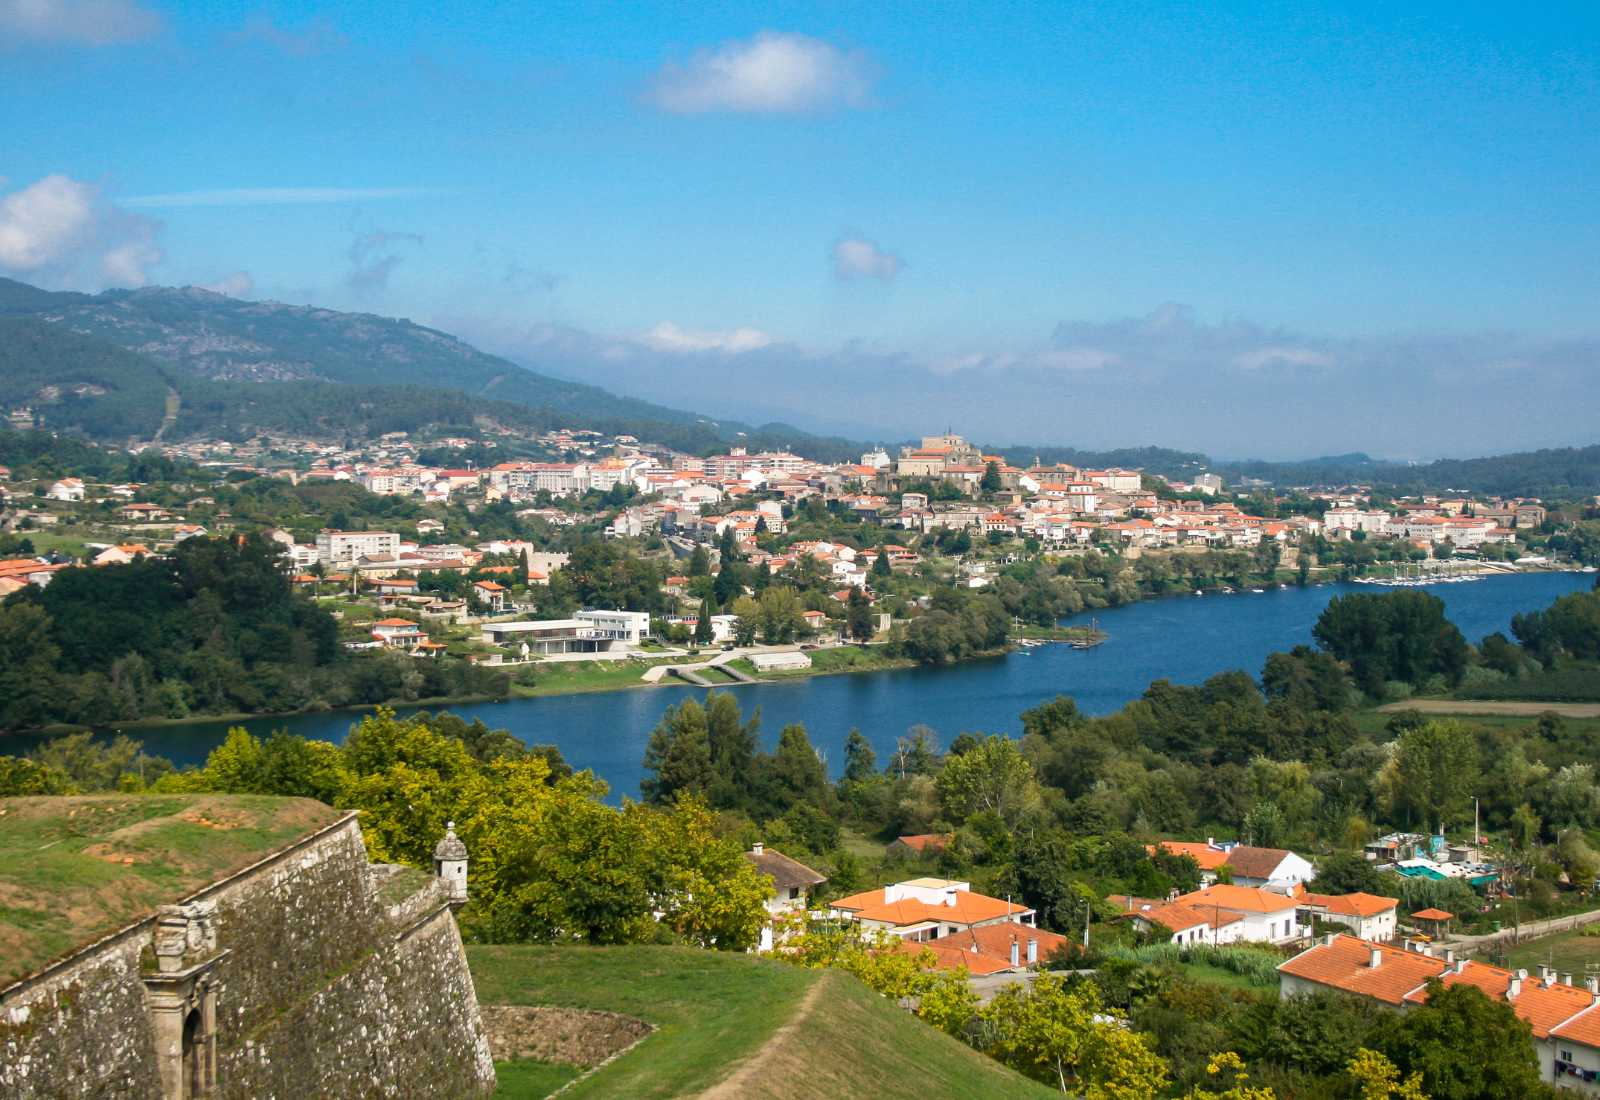 Landscape of Tui from Valença do Minho, with the Miño river.